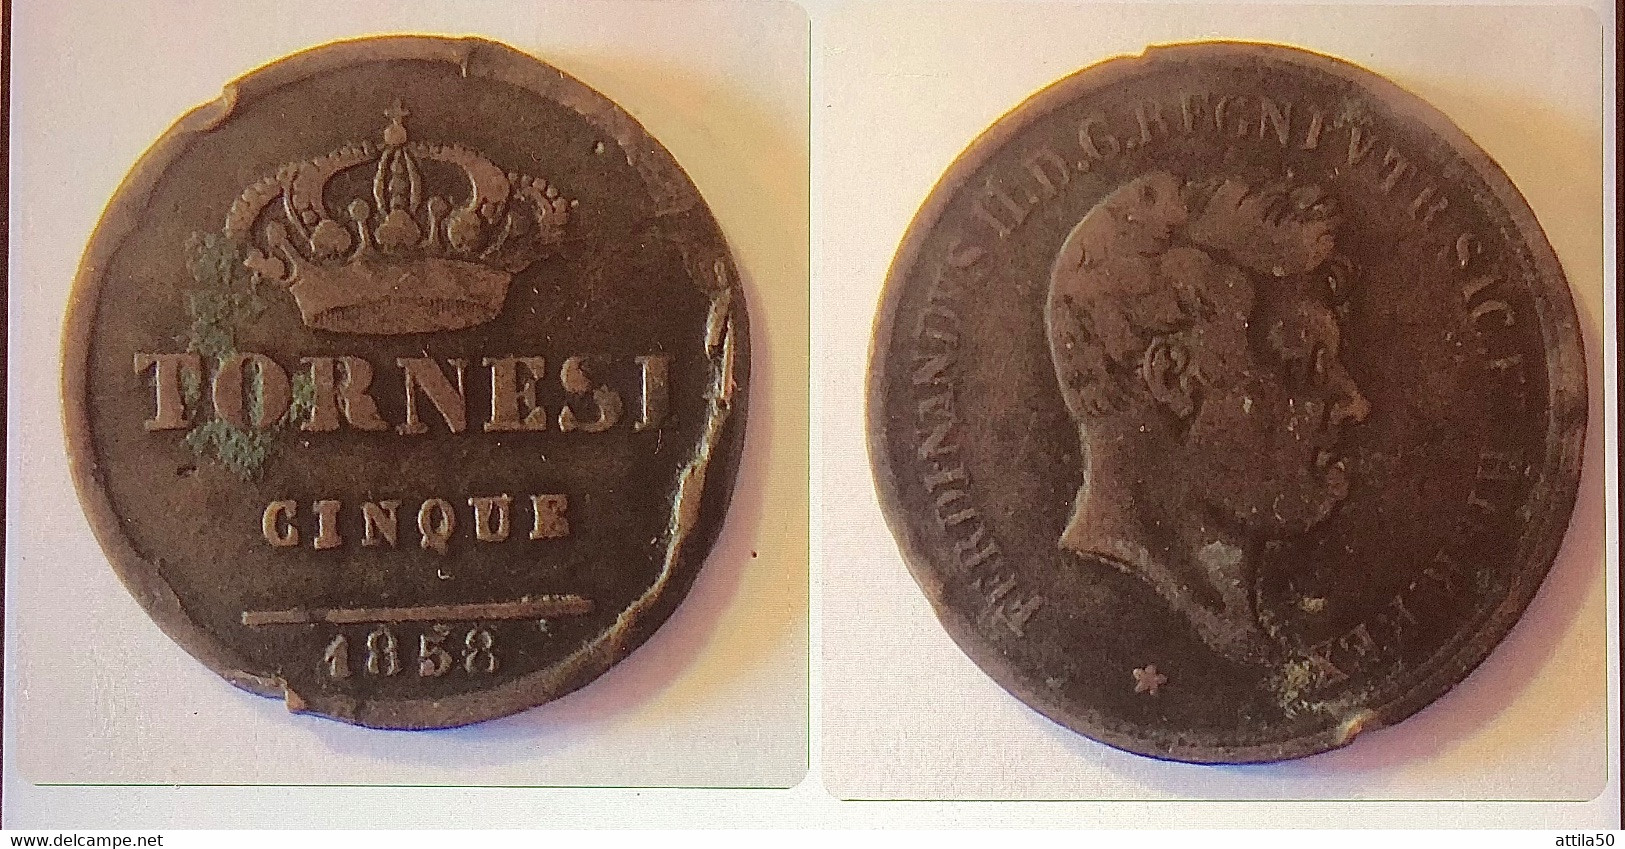 NAPOLI- Ferdinando II Di BORBONE- TORNESI CINQUE 1858 - NC. - Due Sicilie